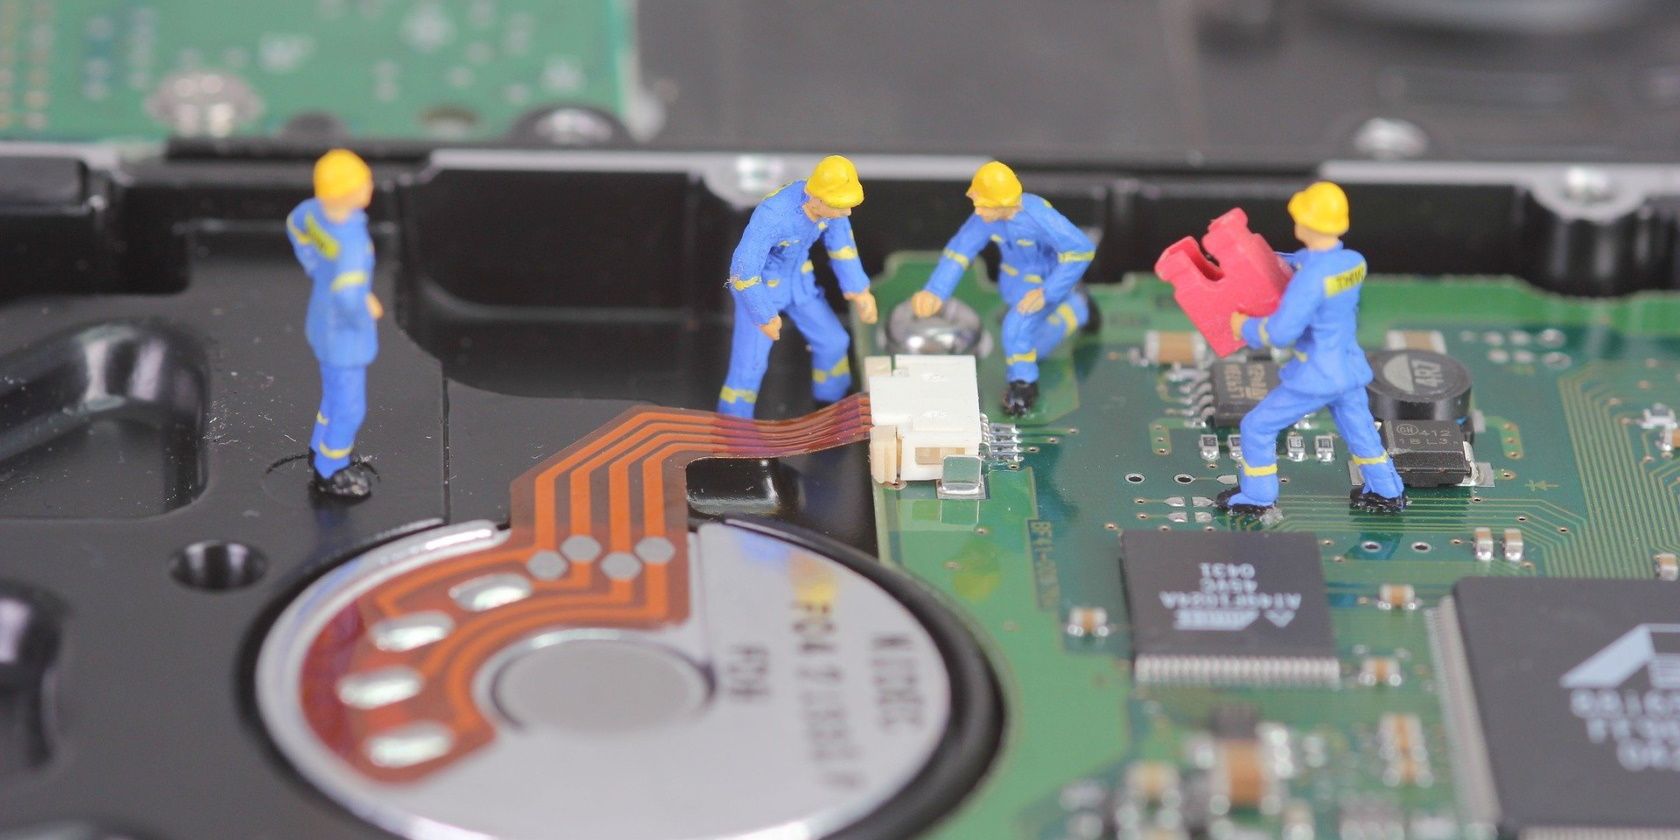 Miniature figures fixing a Computer